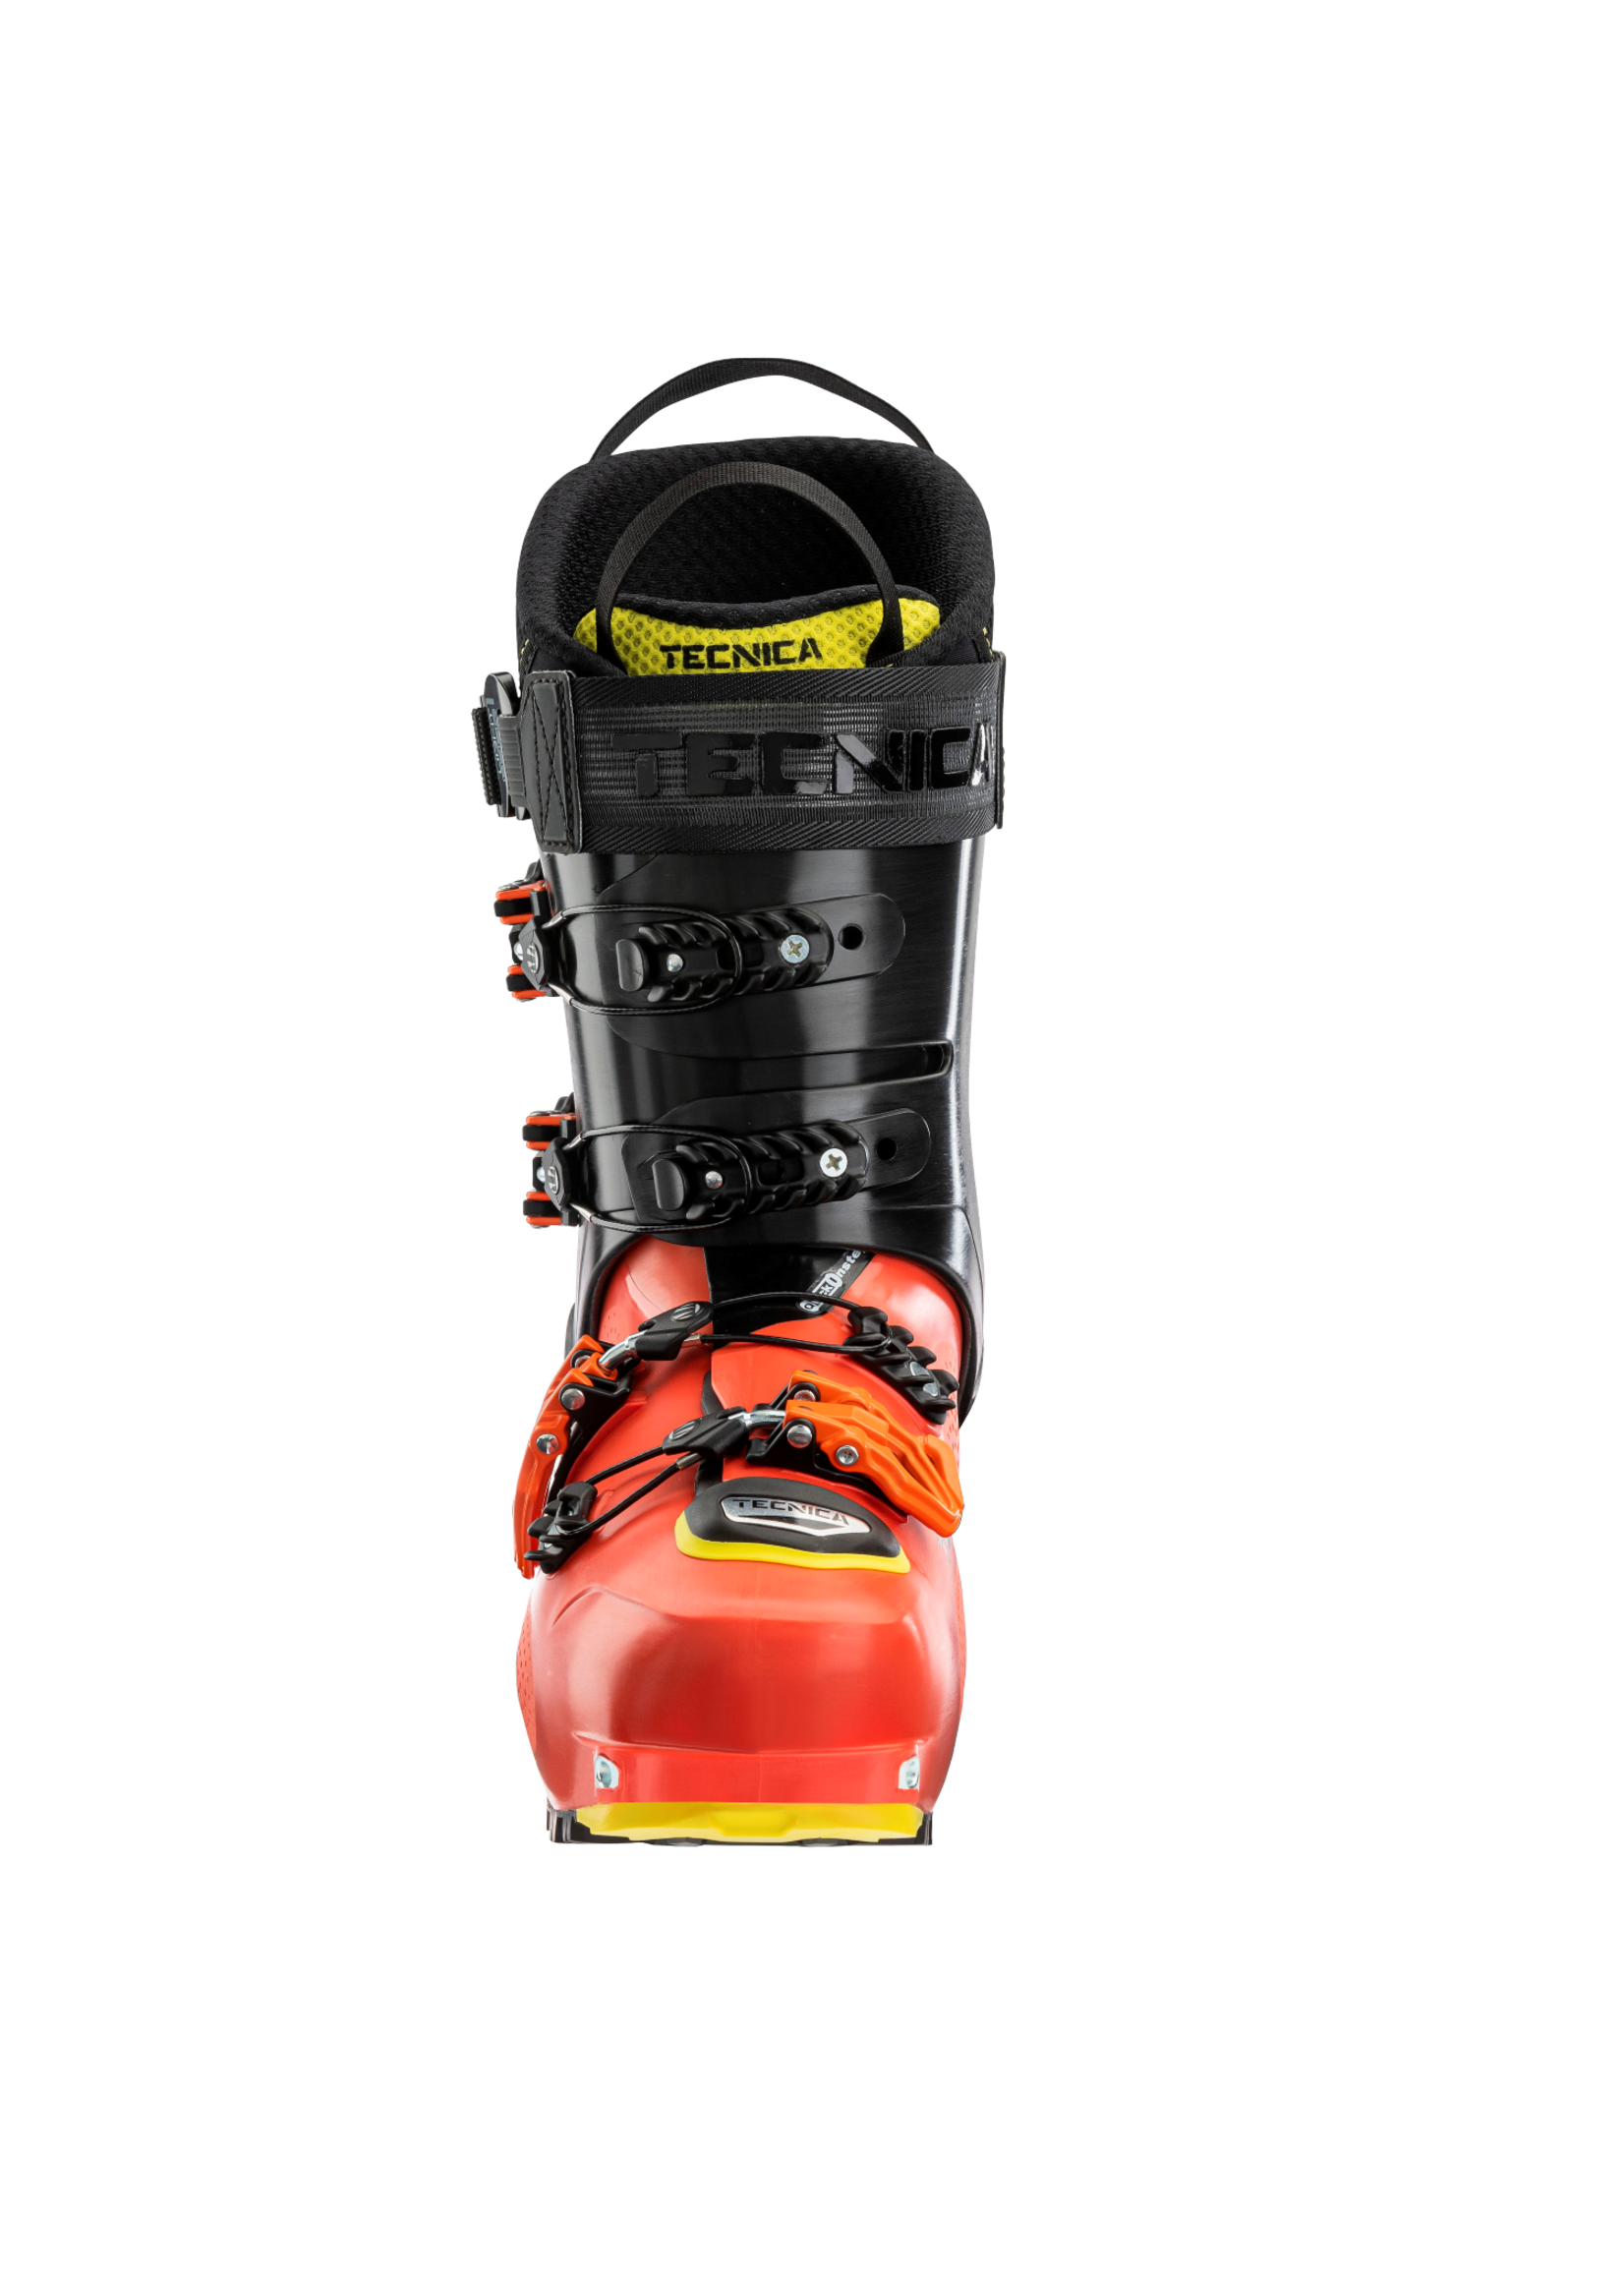 Tecnica Tecnica Zero G Tour Pro Ski Boots